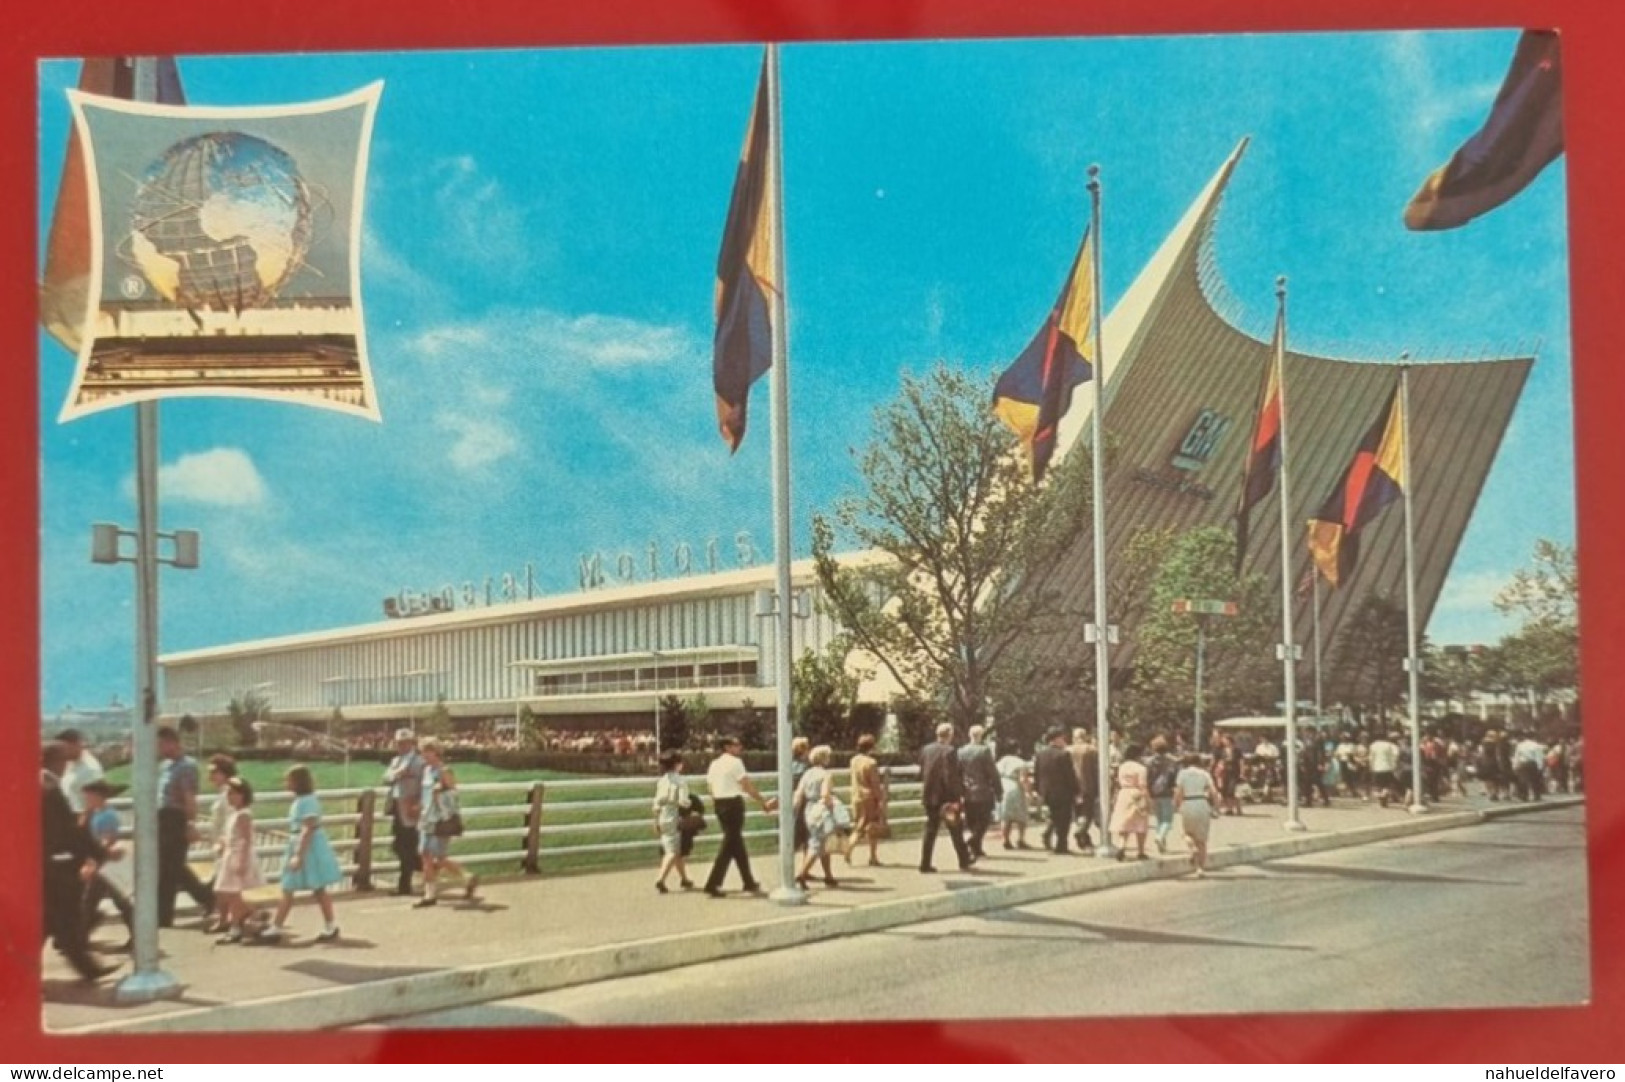 Uncirculated Postcard - USA - NY, NEW YORK WORLD'S FAIR 1964-65 - GENERAL MOTORS FUTURAMA BUILDING - Mostre, Esposizioni